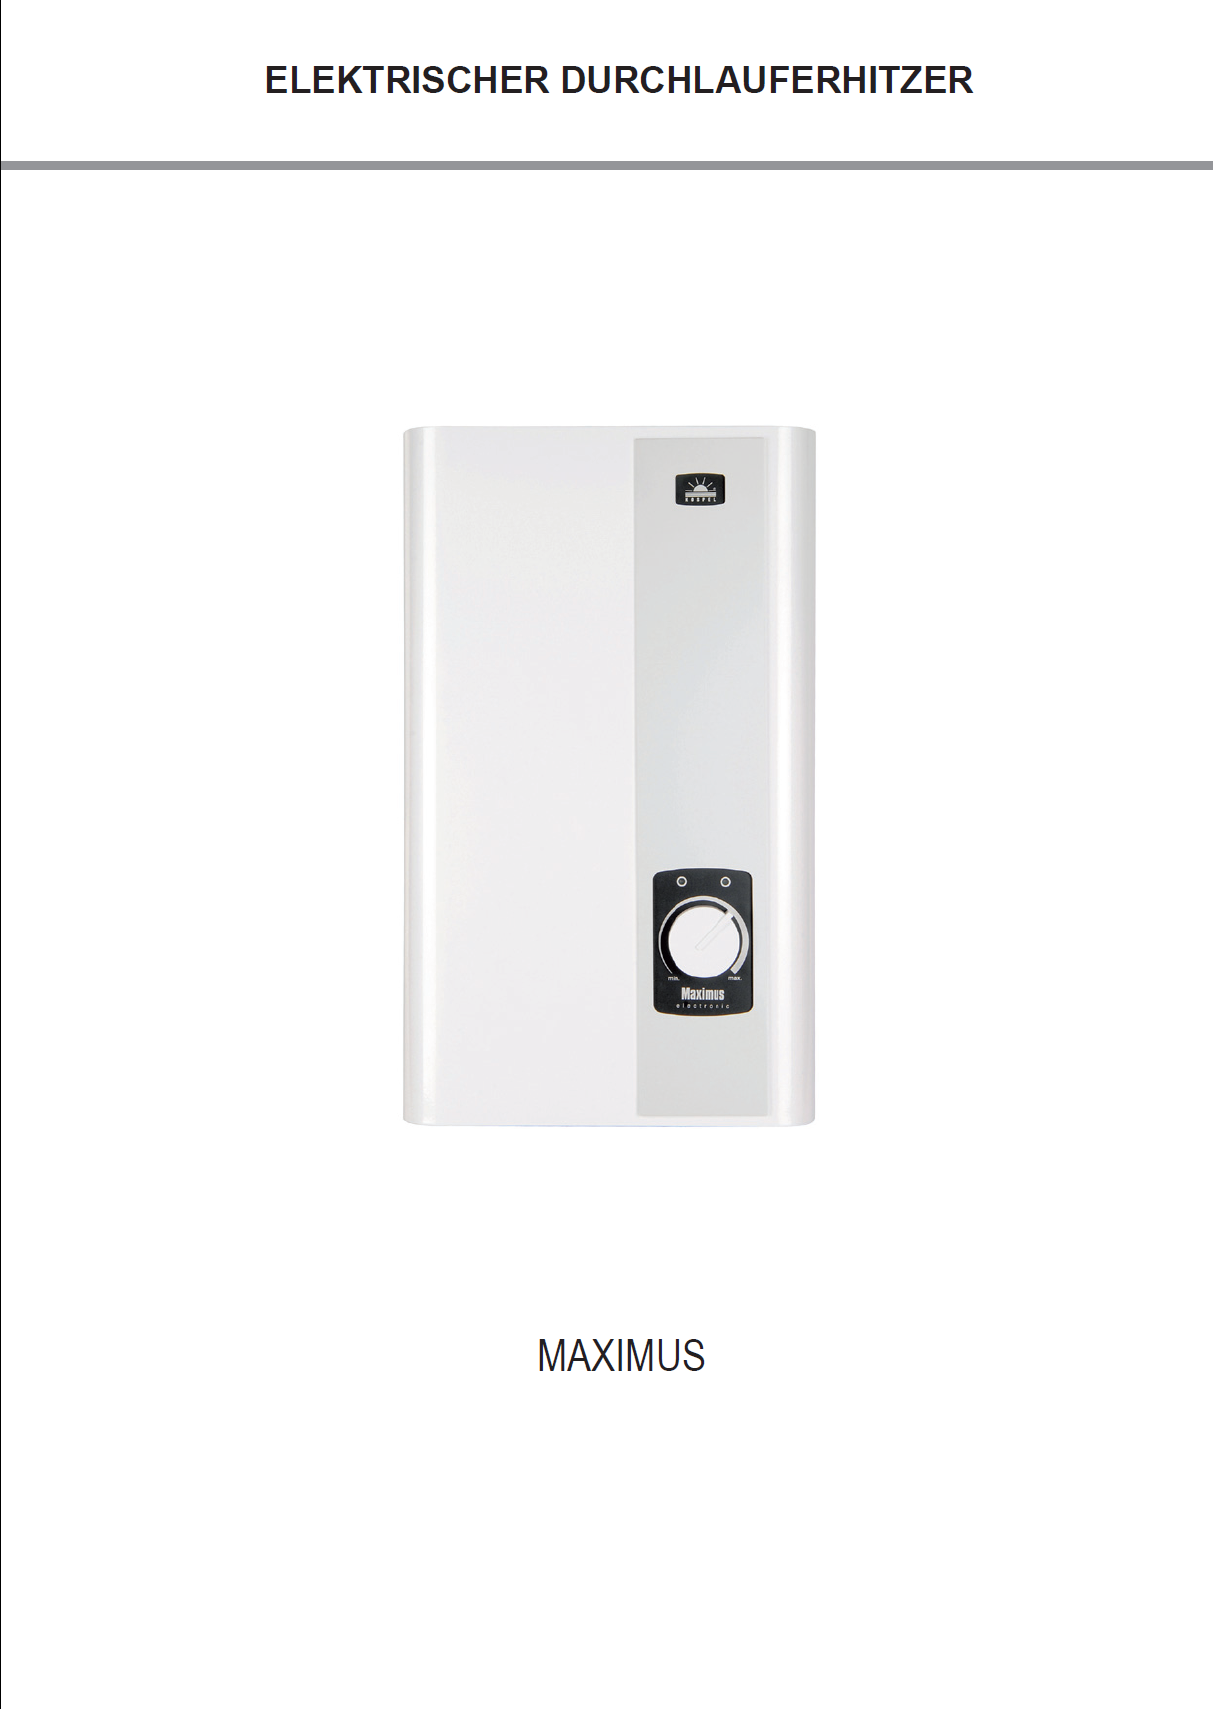 Bedienungsanleitung EPP Maximus electronic 36 kW.pdf